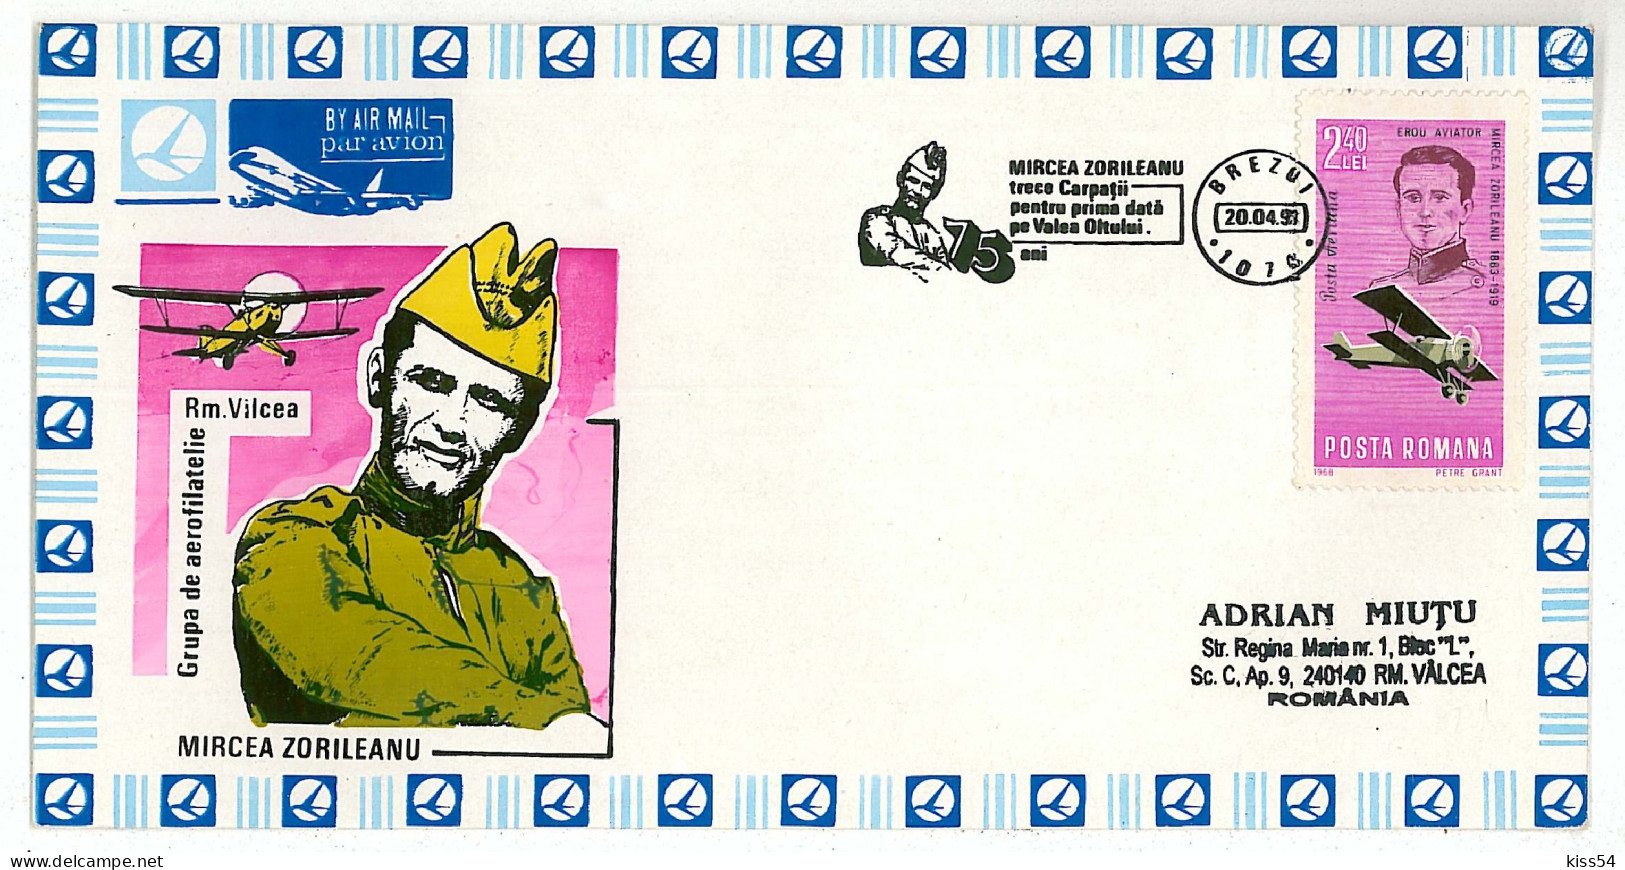 COV 58 - 3-a AVIATION, Mircea ZORILEANU, Romania - Cover - Used - 1991 - Covers & Documents